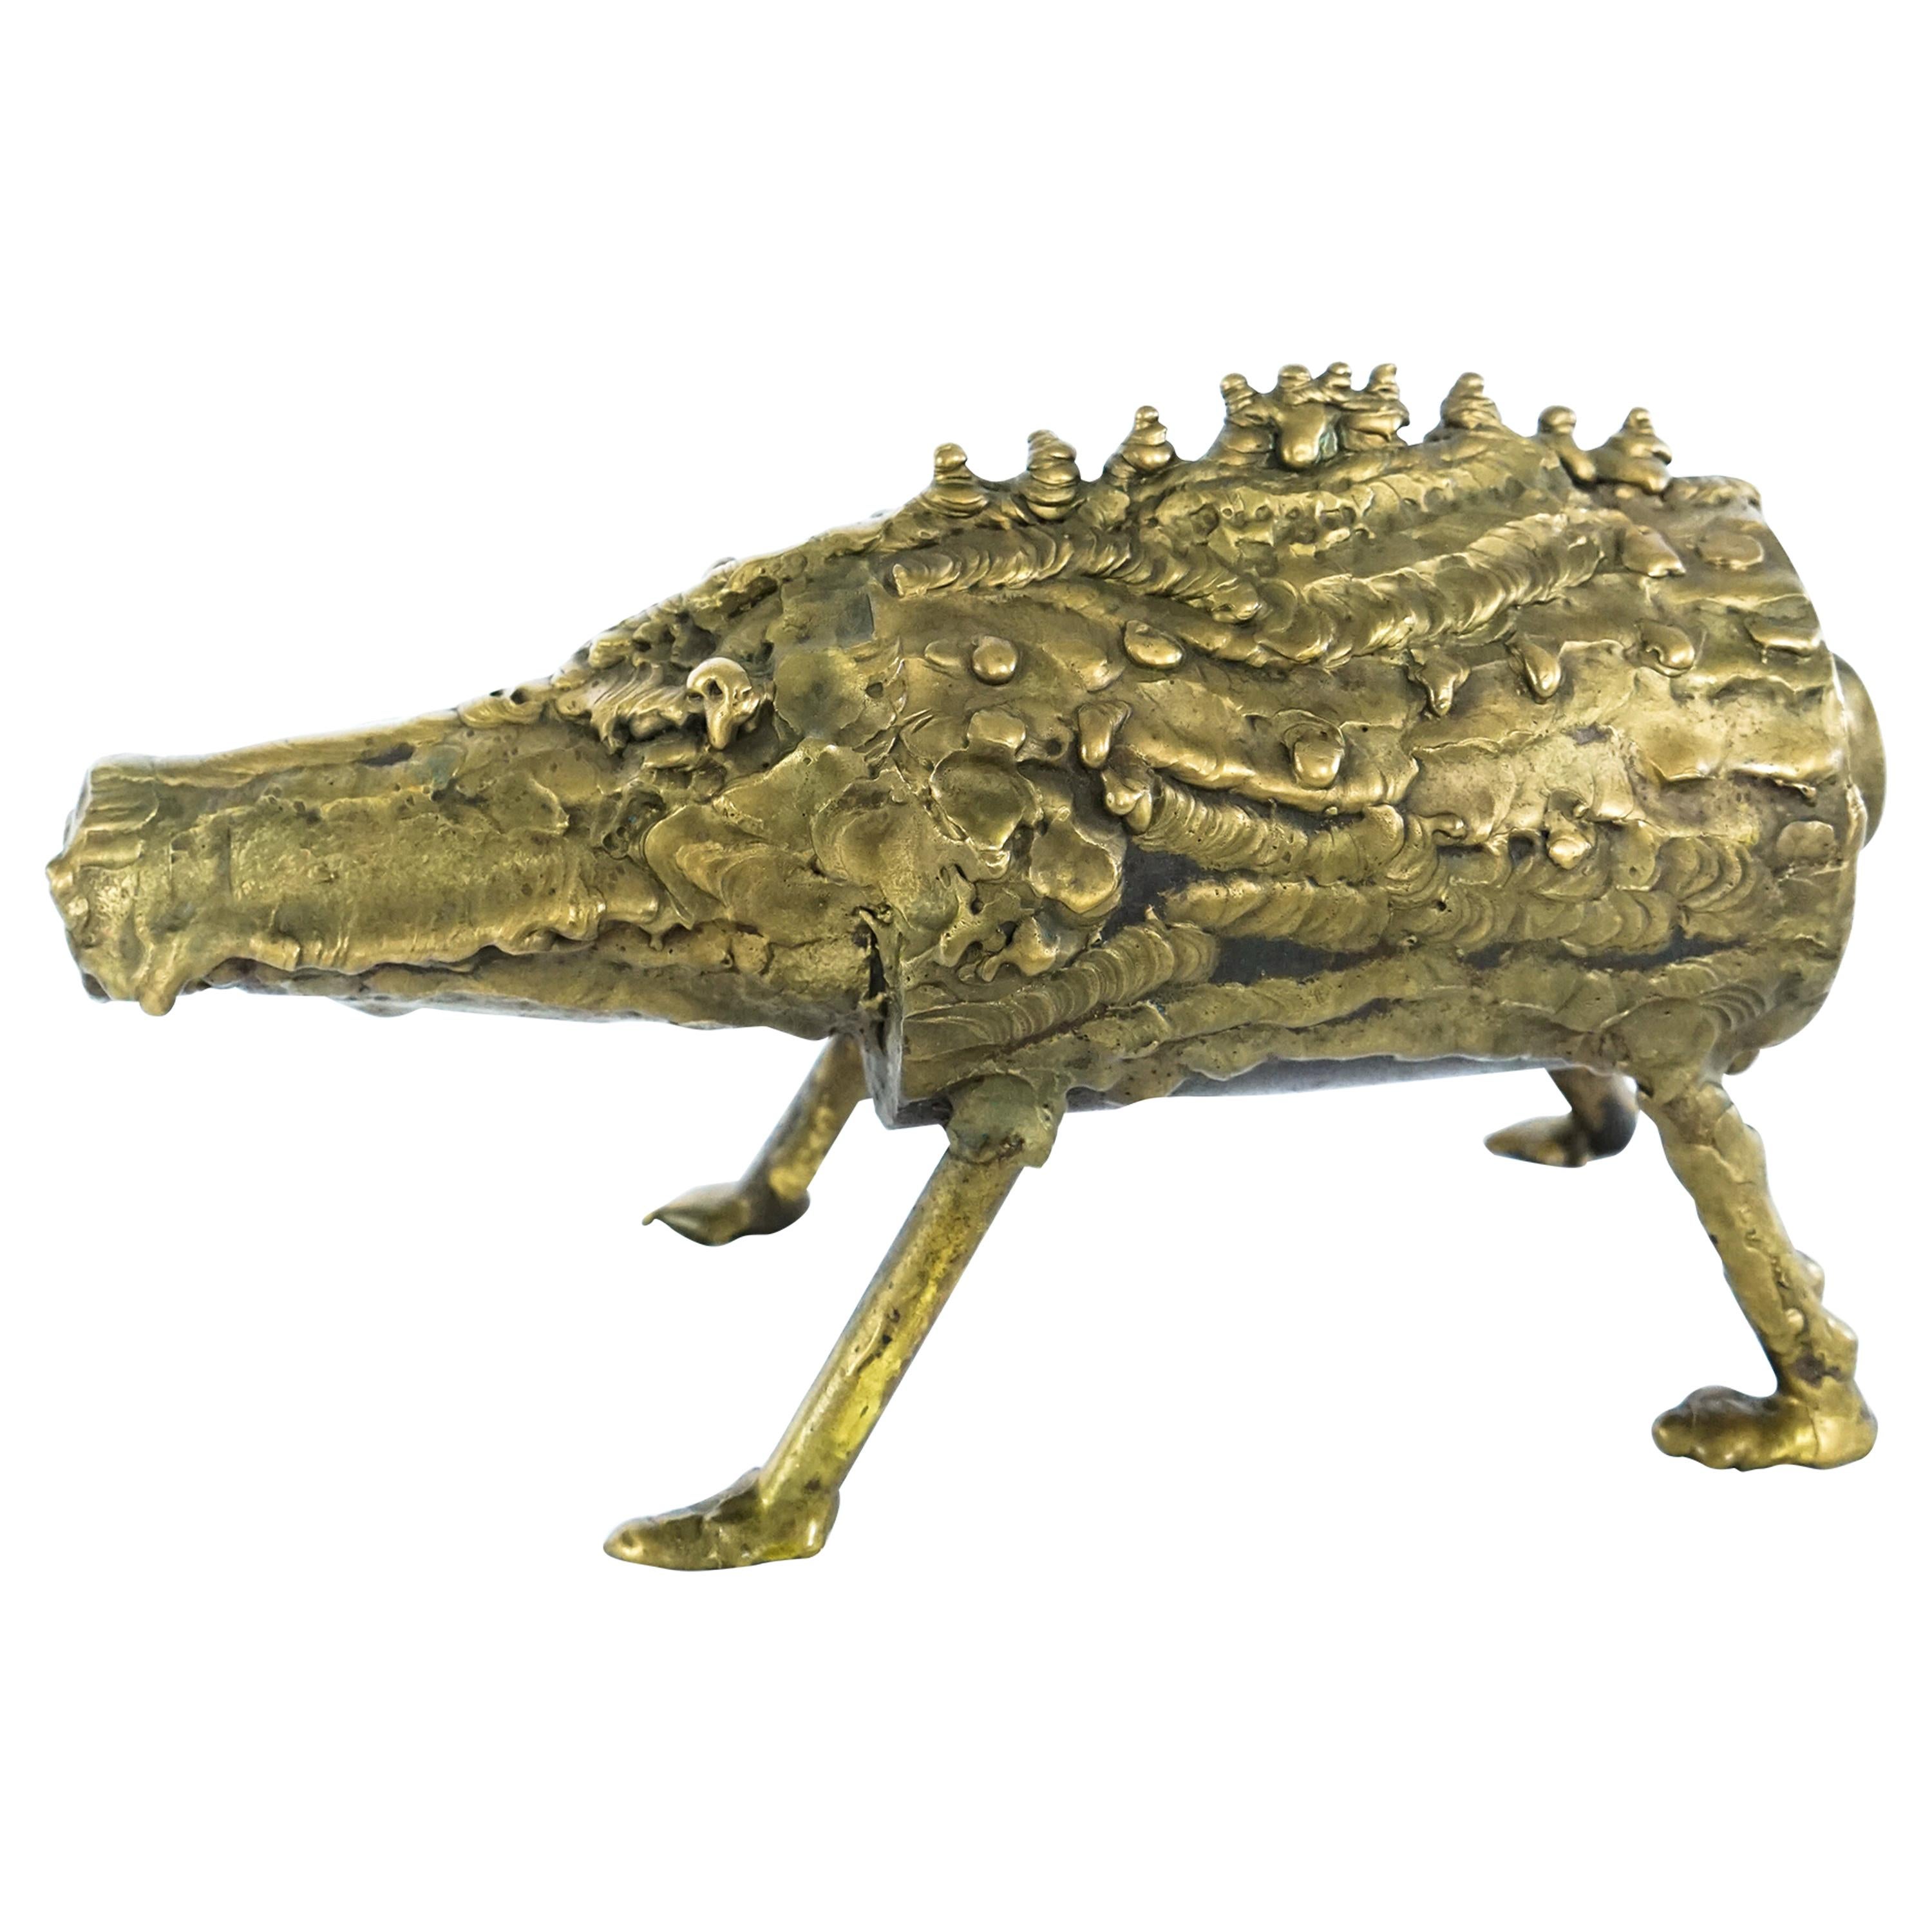 21st century, contemporary, cast bronze, Figurative Metal Sculpture "Golden Pig"